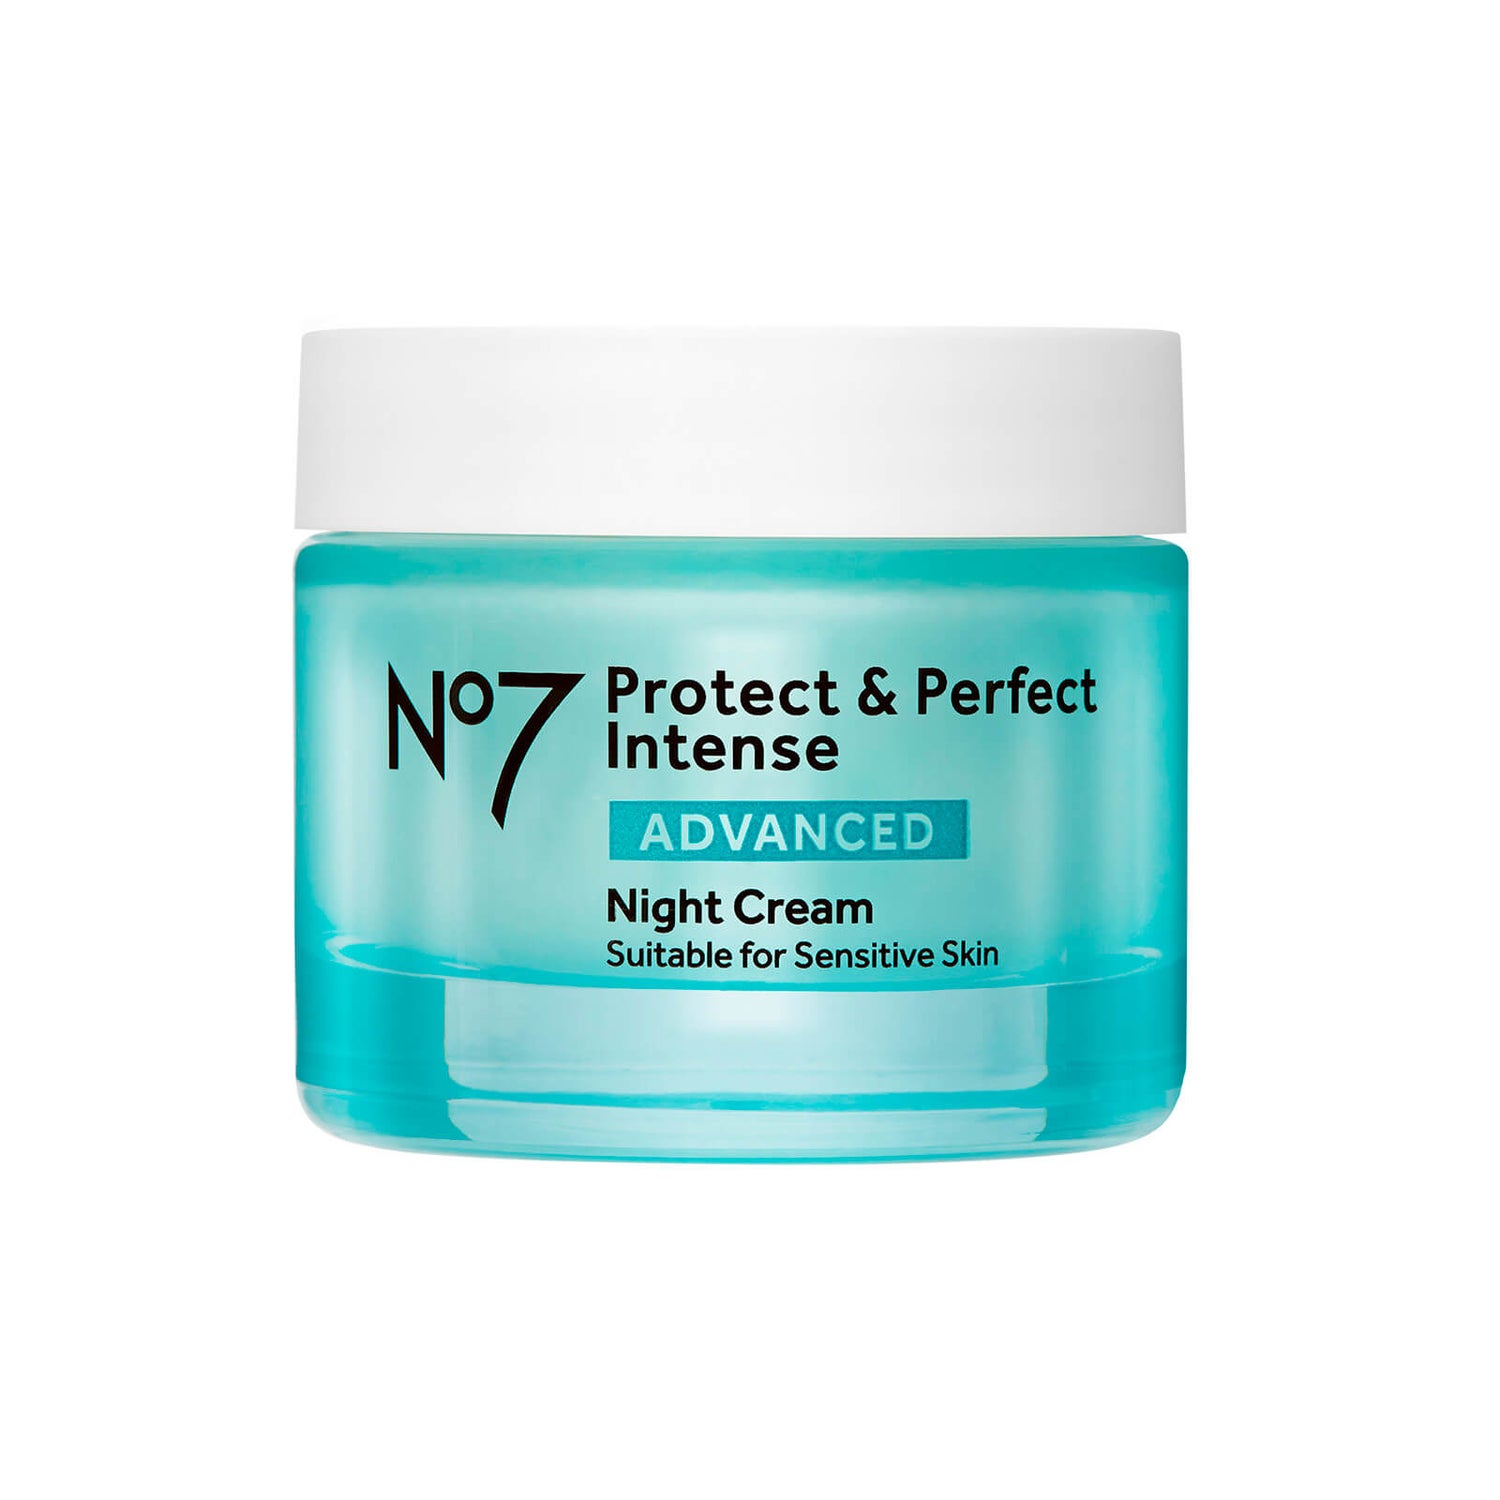 Protect & Perfect Intense ADVANCED Night Cream 50ml